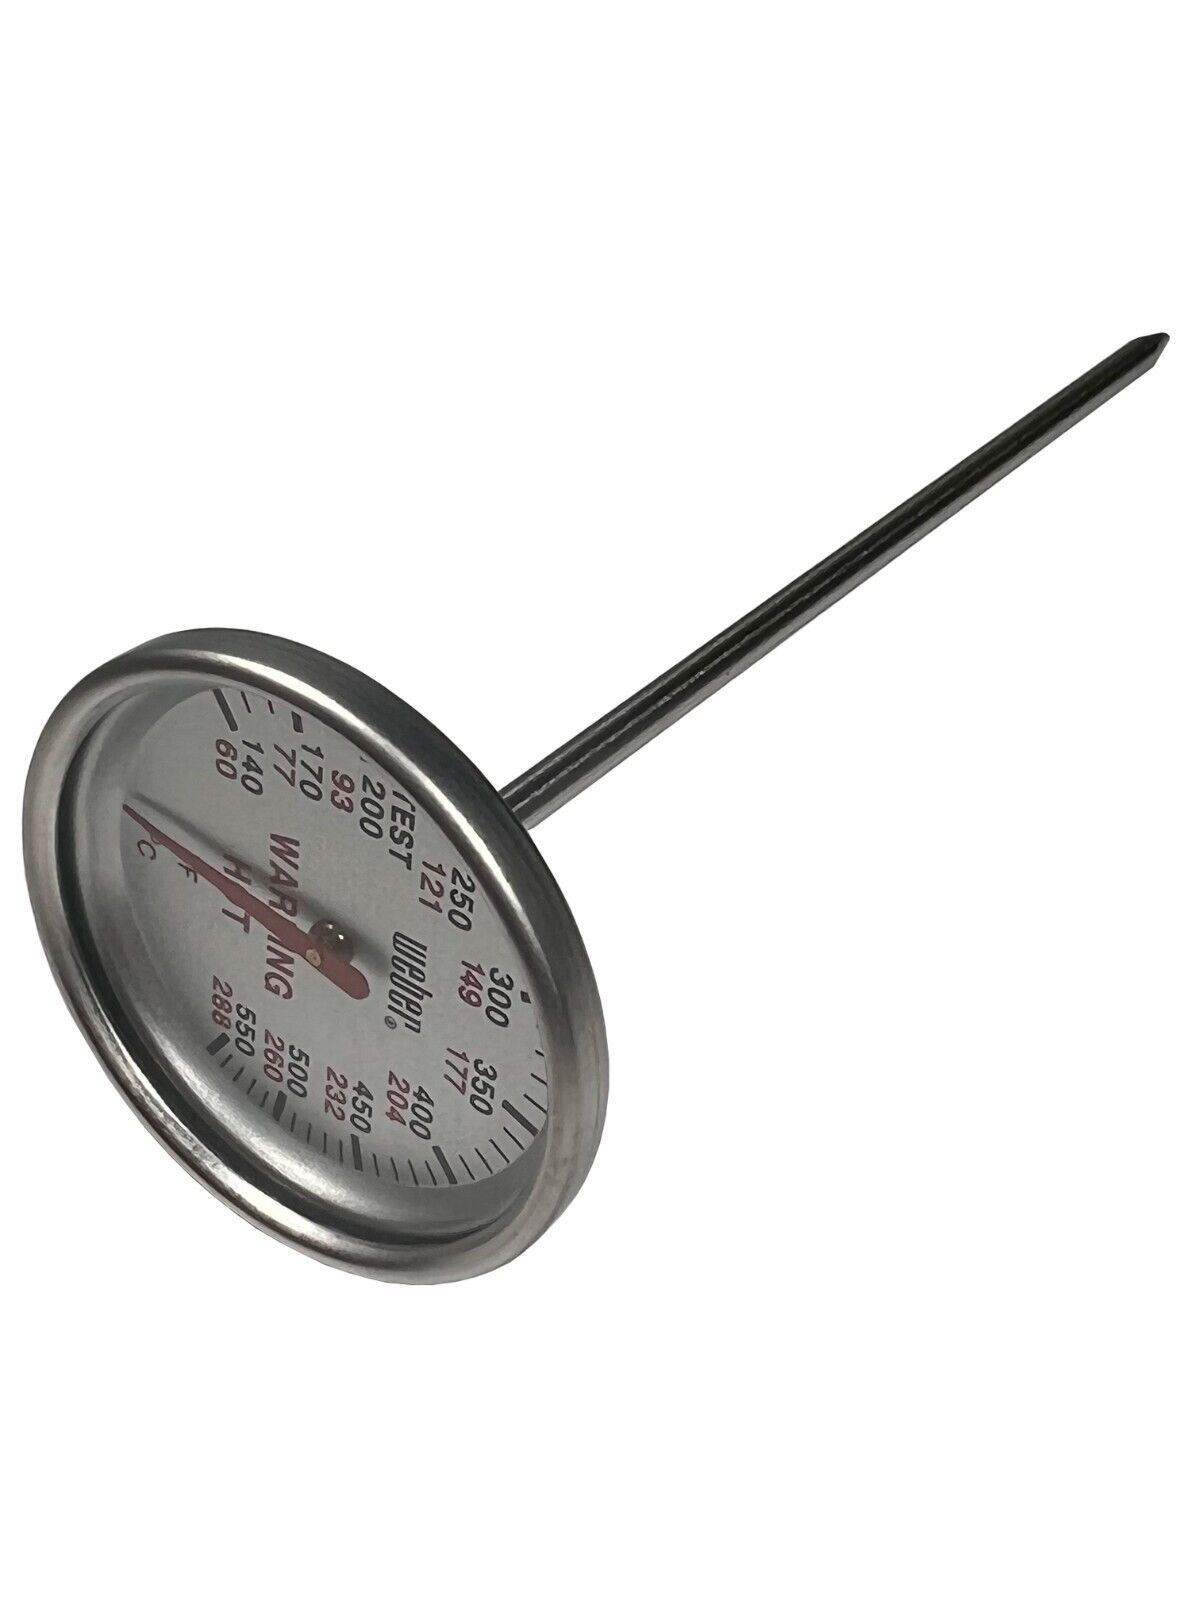 GENUINE WEBER Thermometer fits Spirit Genesis Platinum Series II Master Touch Al - $36.09